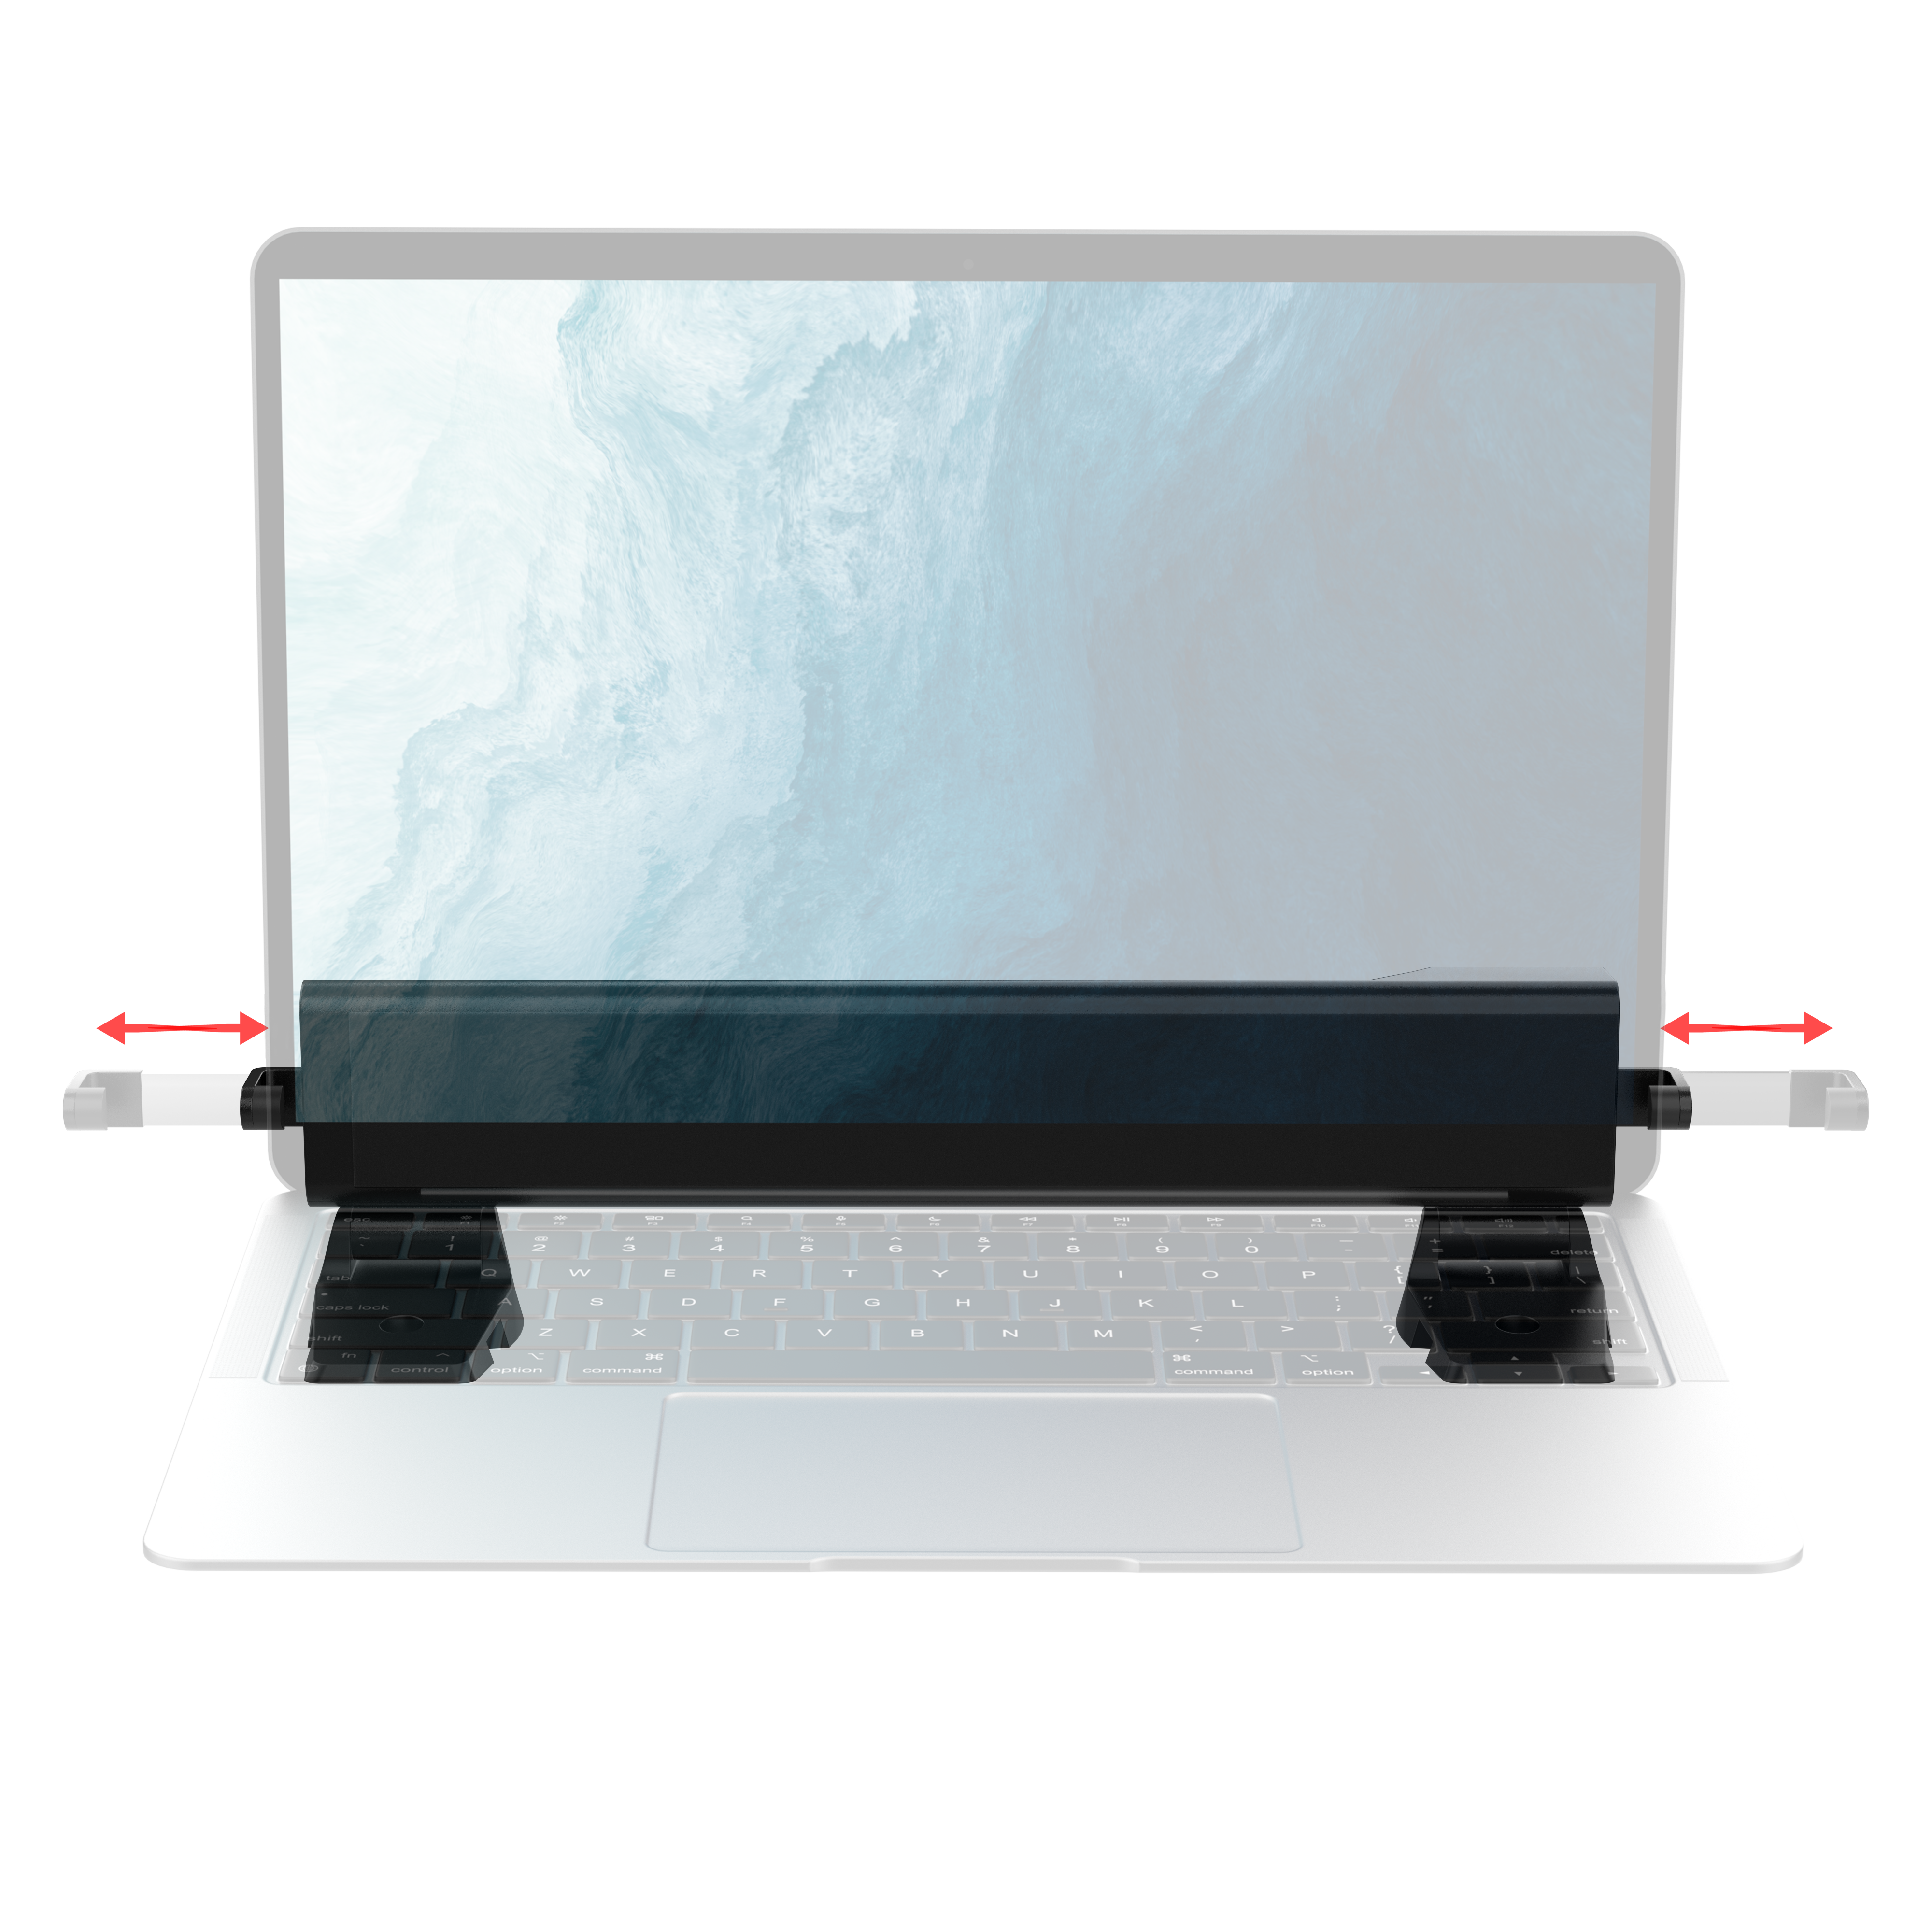 Locking and Folding Security Laptop Desk Mount